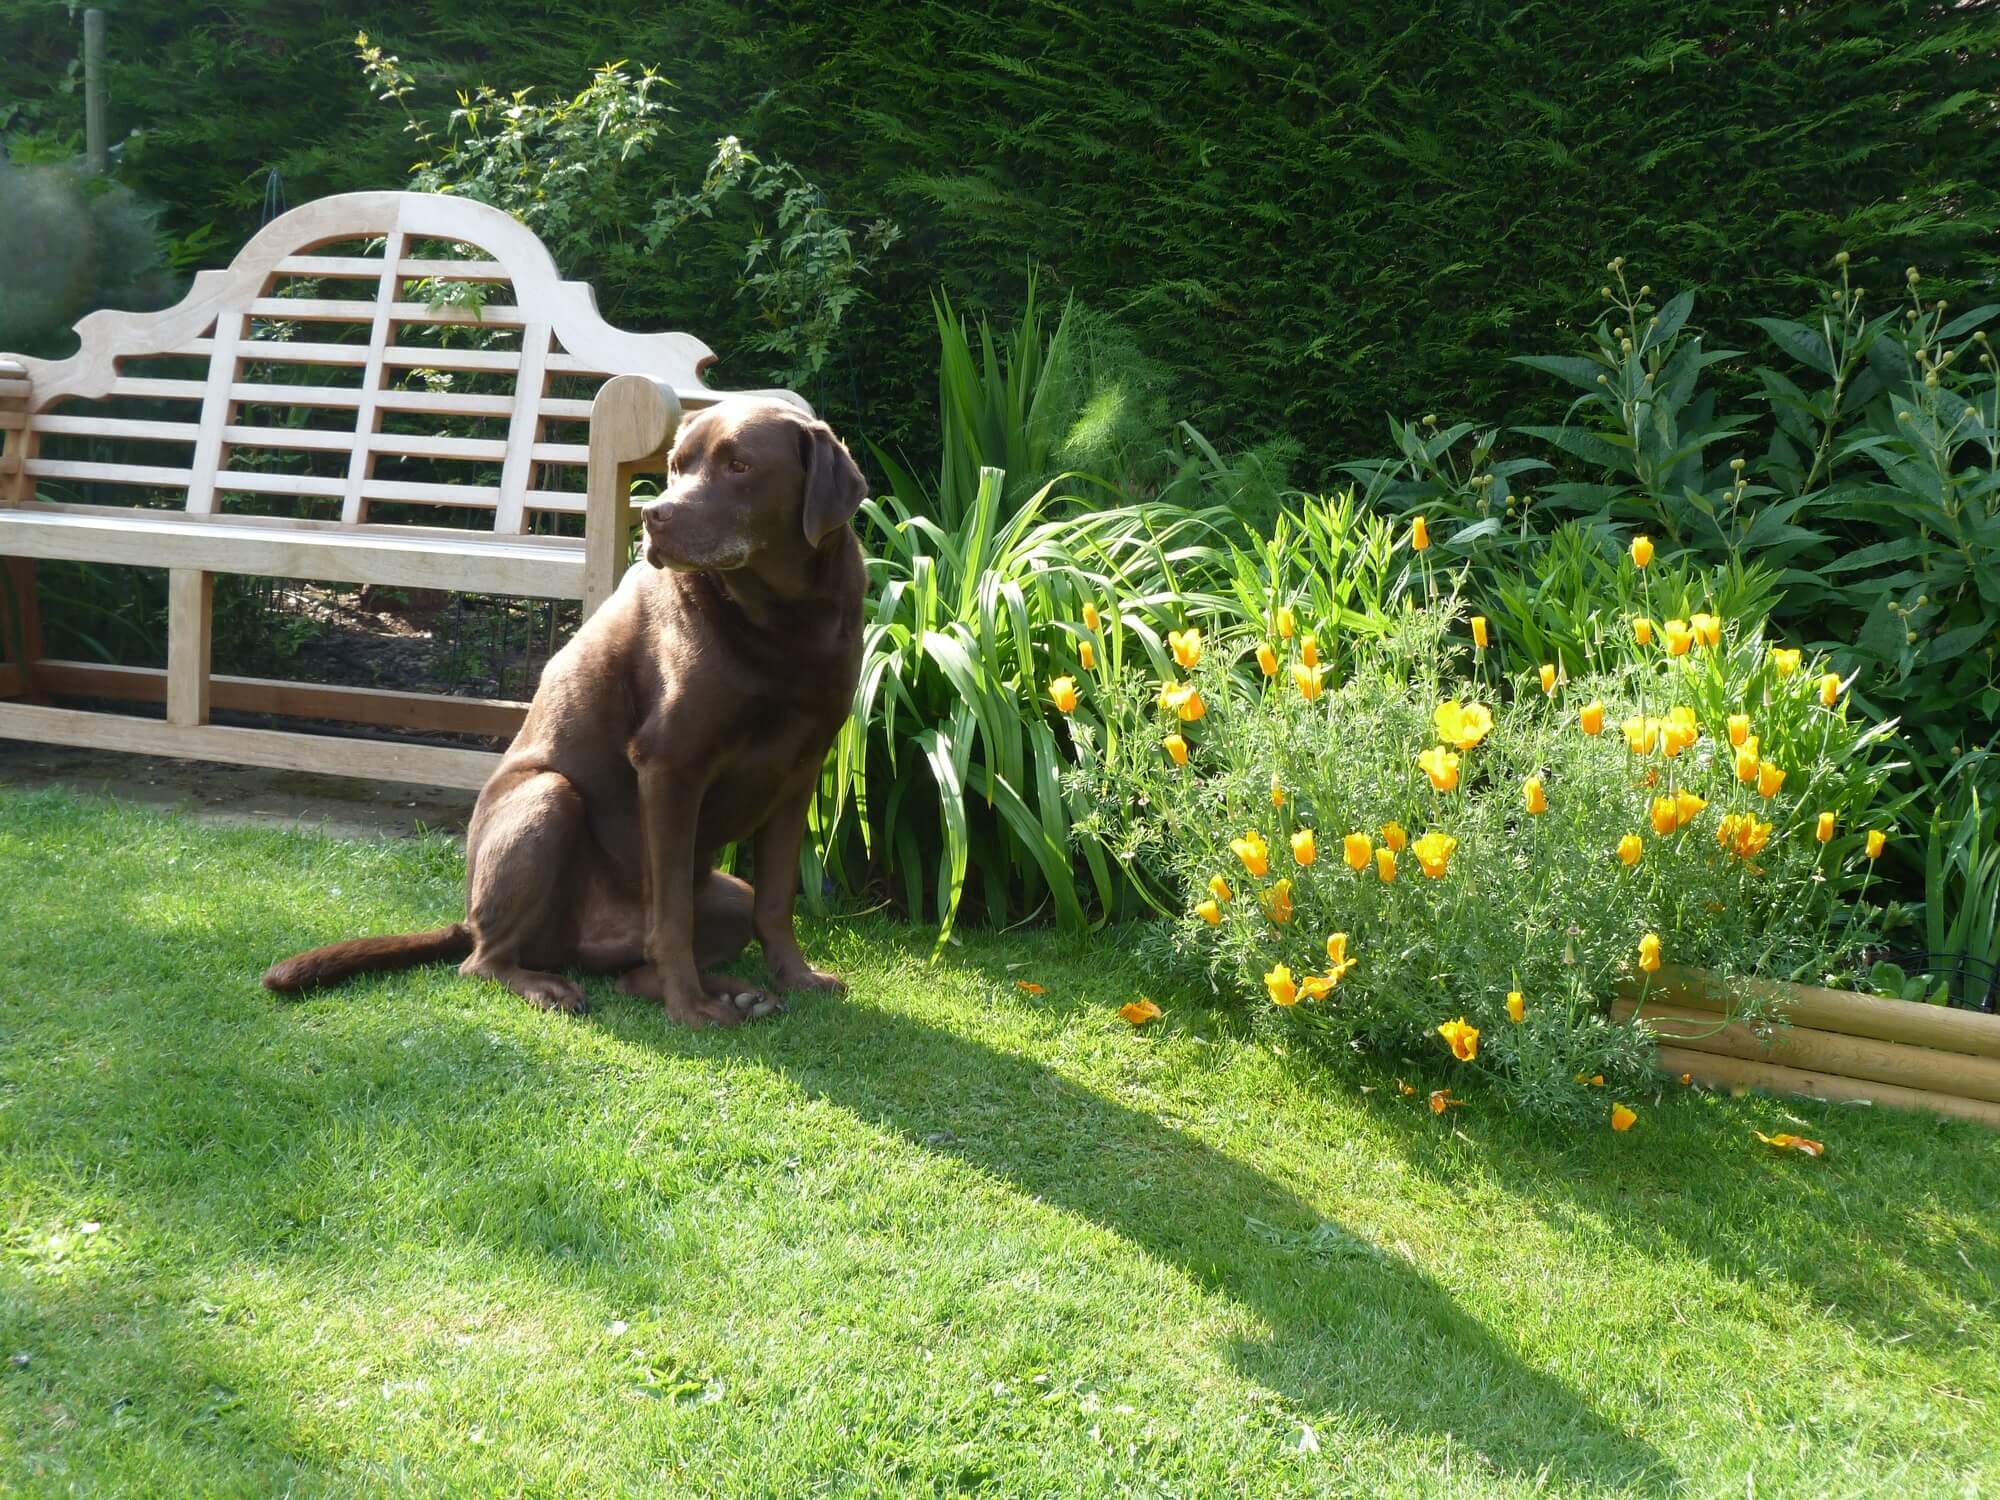 Boz in his Garden enjoying the summer sun.